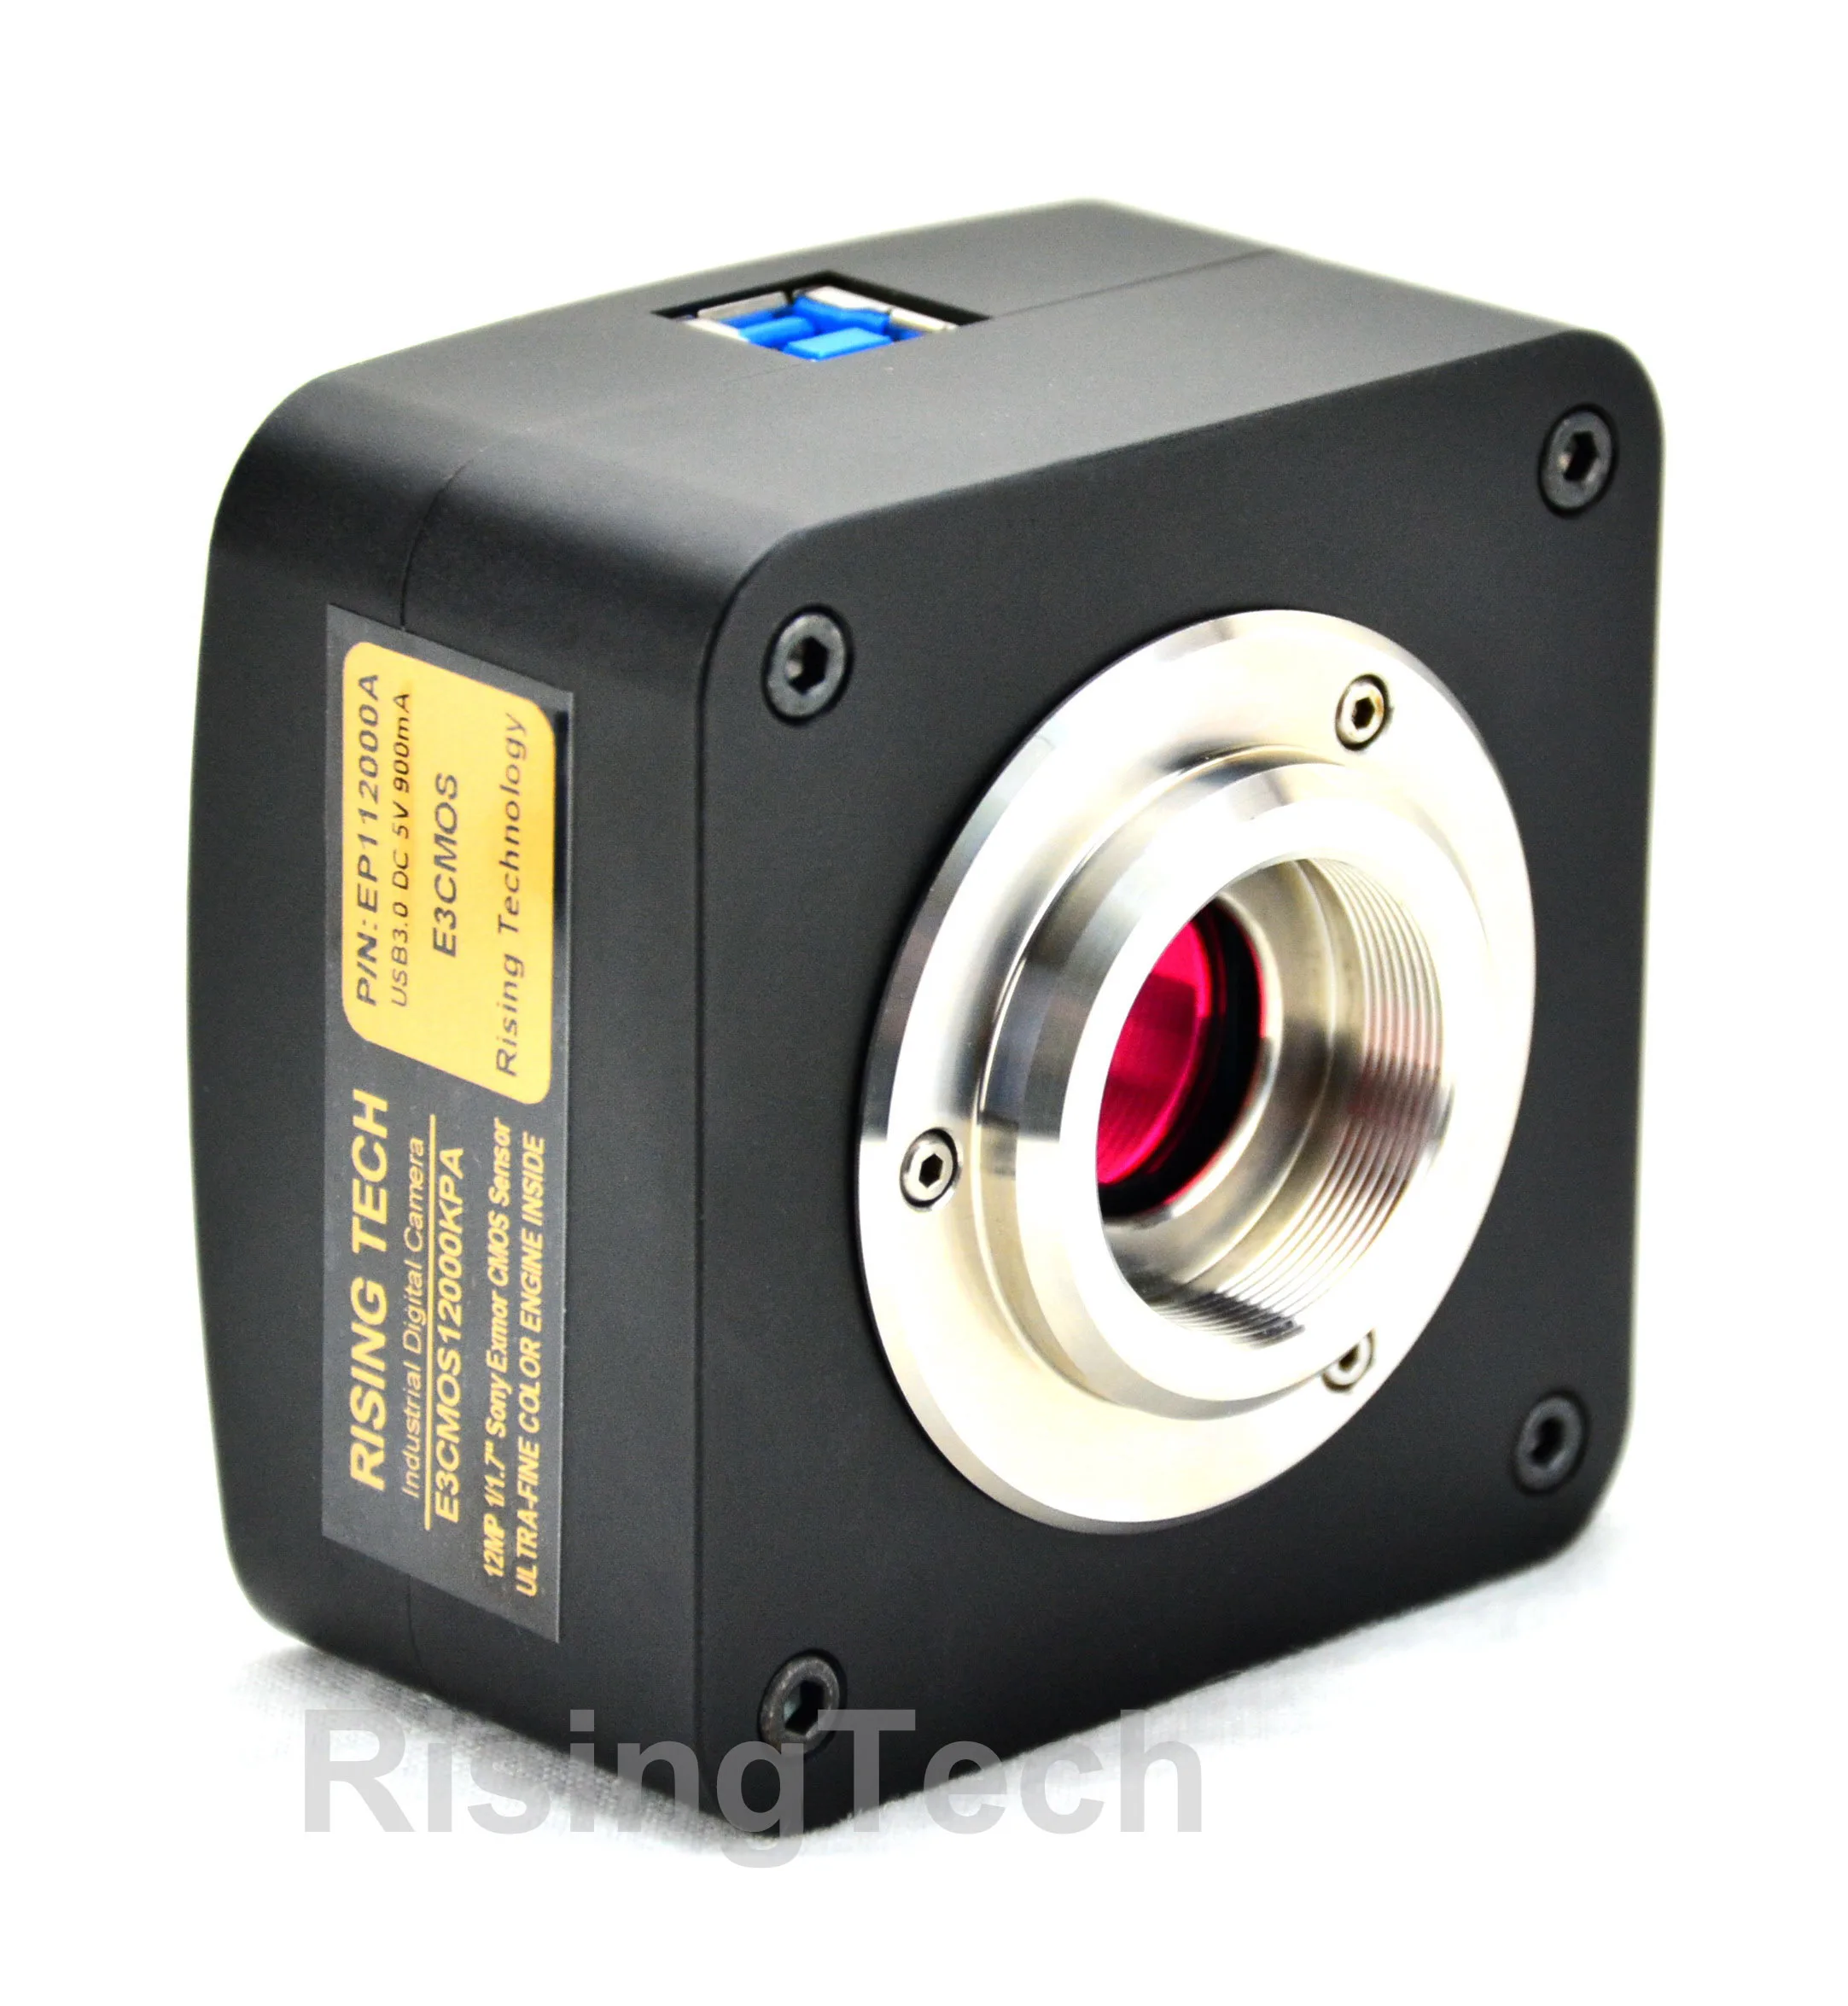 High frame rate 59fps 30fps 6.3 MP SONY imx178 USB3.0 Mikroskop-Kamera for trinokulartubus mikroskop